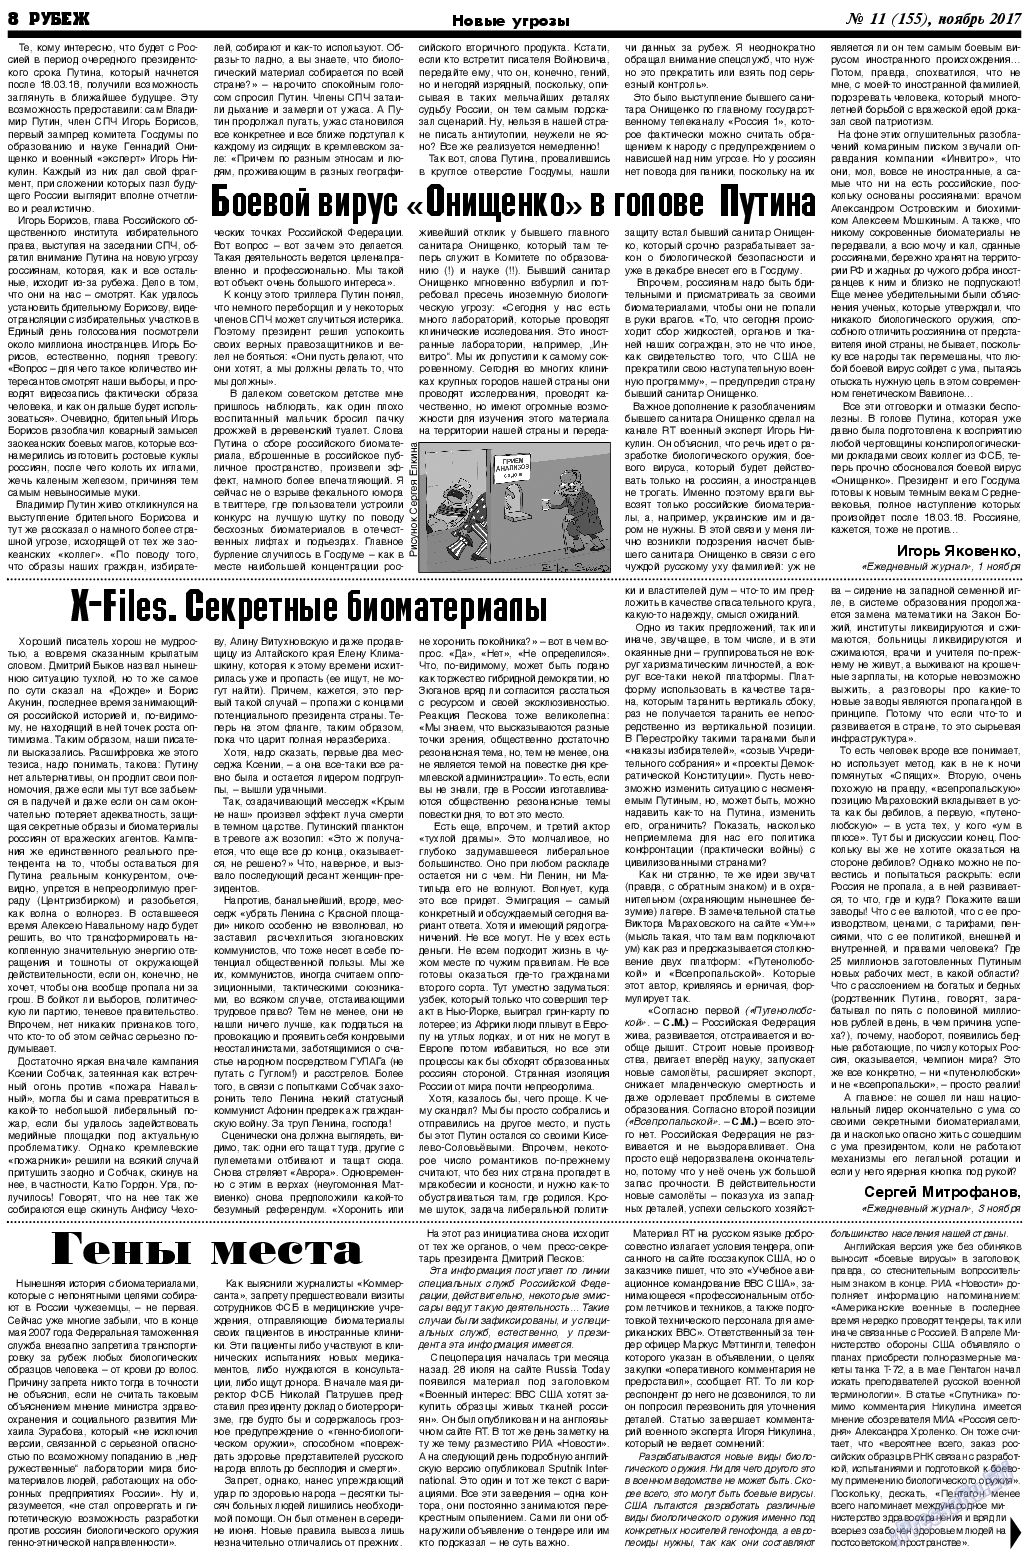 Рубеж, газета. 2017 №11 стр.8